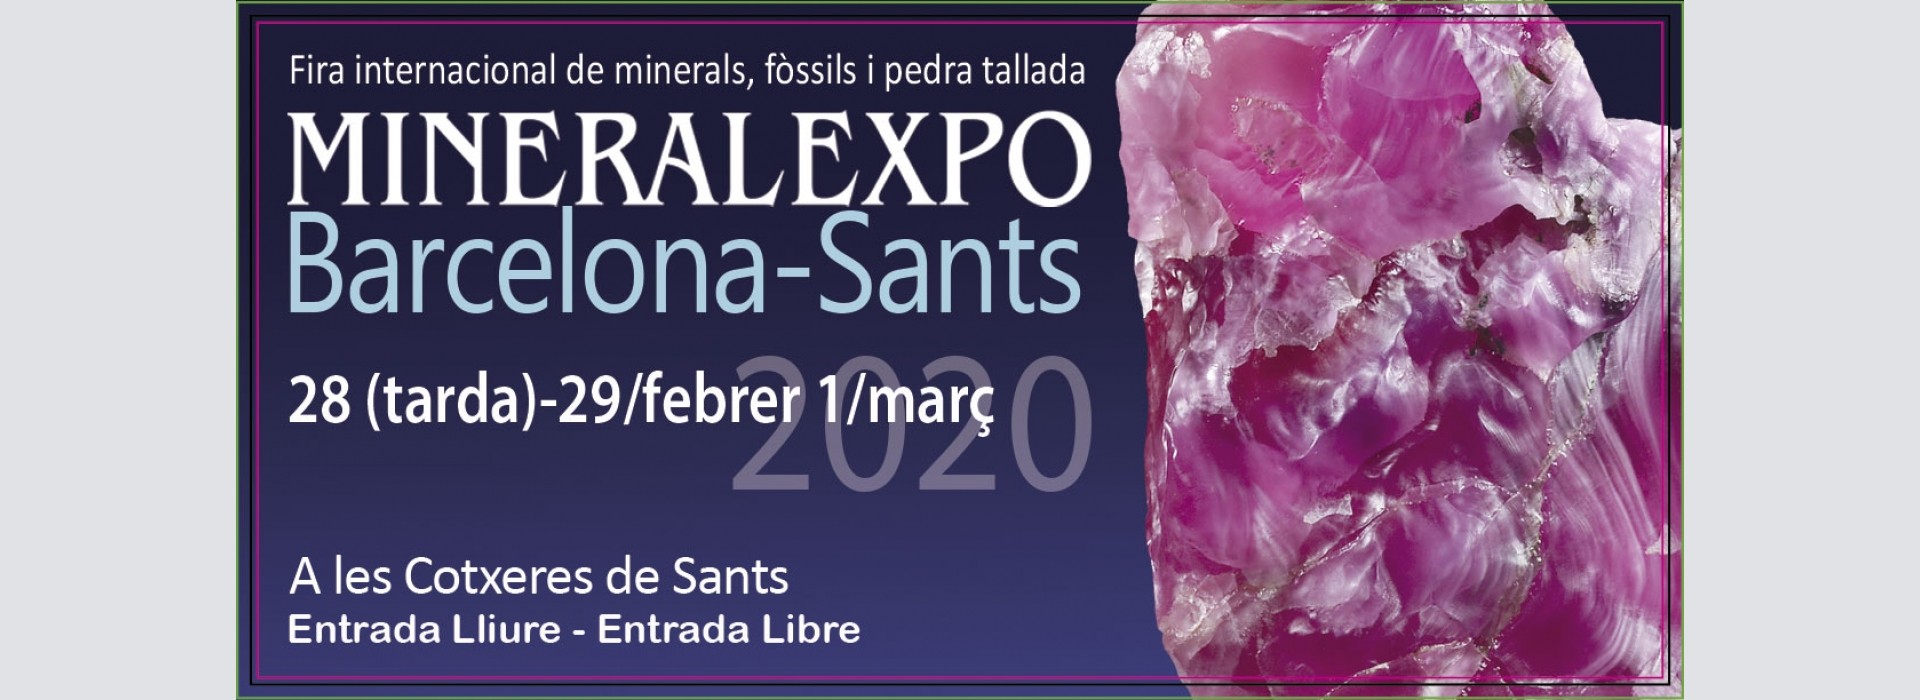 MineralExpo Barcelona-Sants 2020